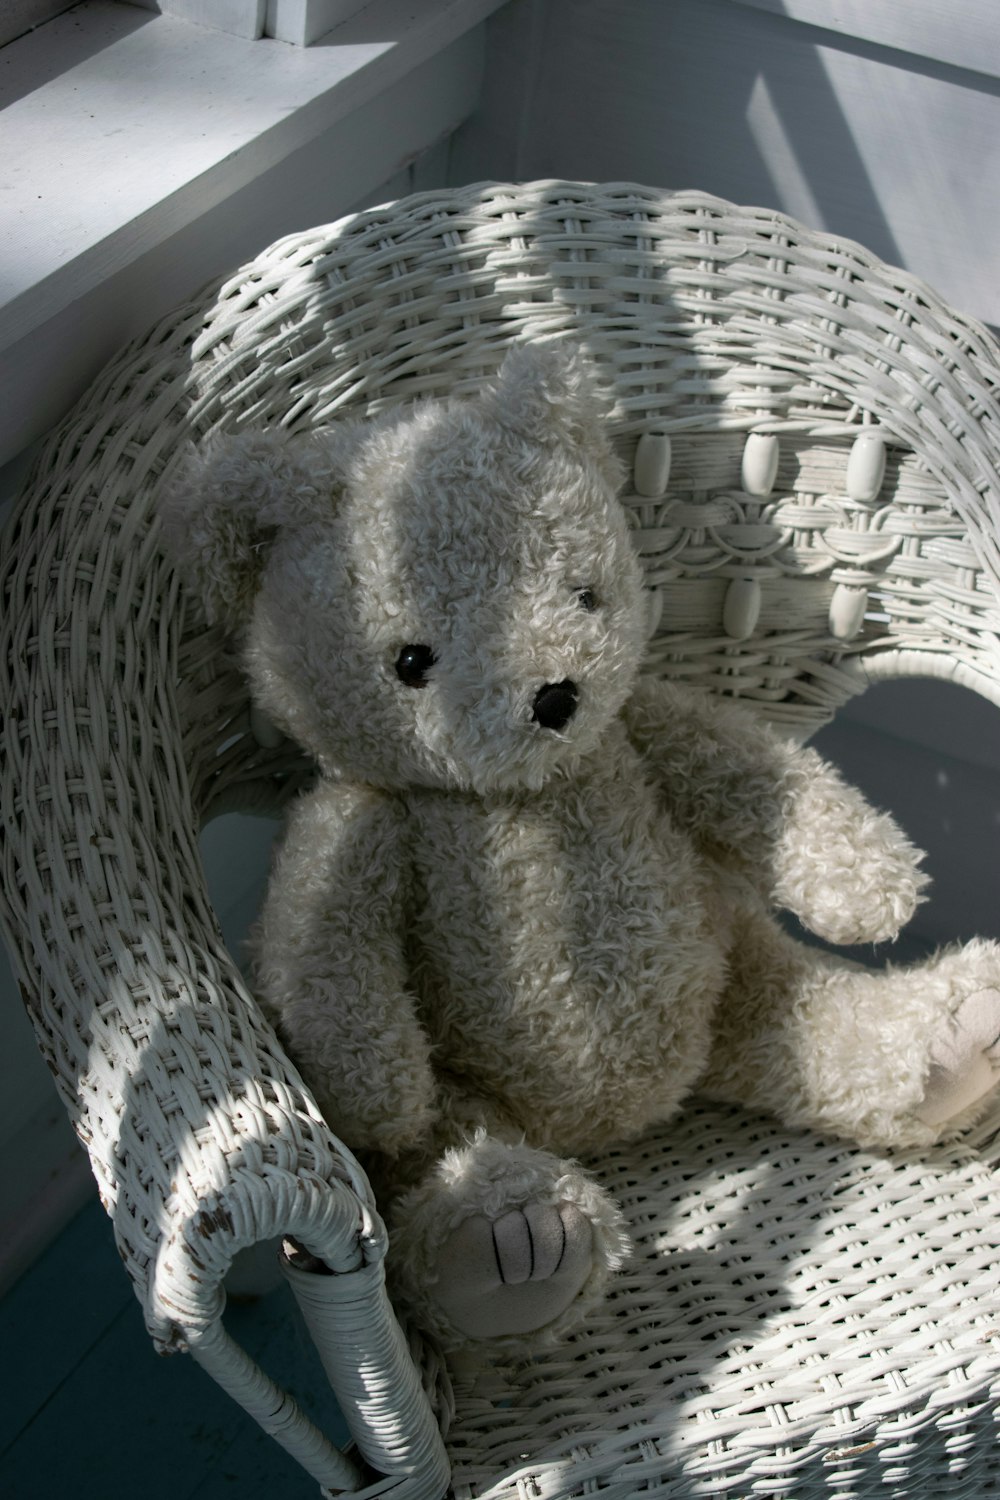 a white teddy bear sitting in a wicker chair